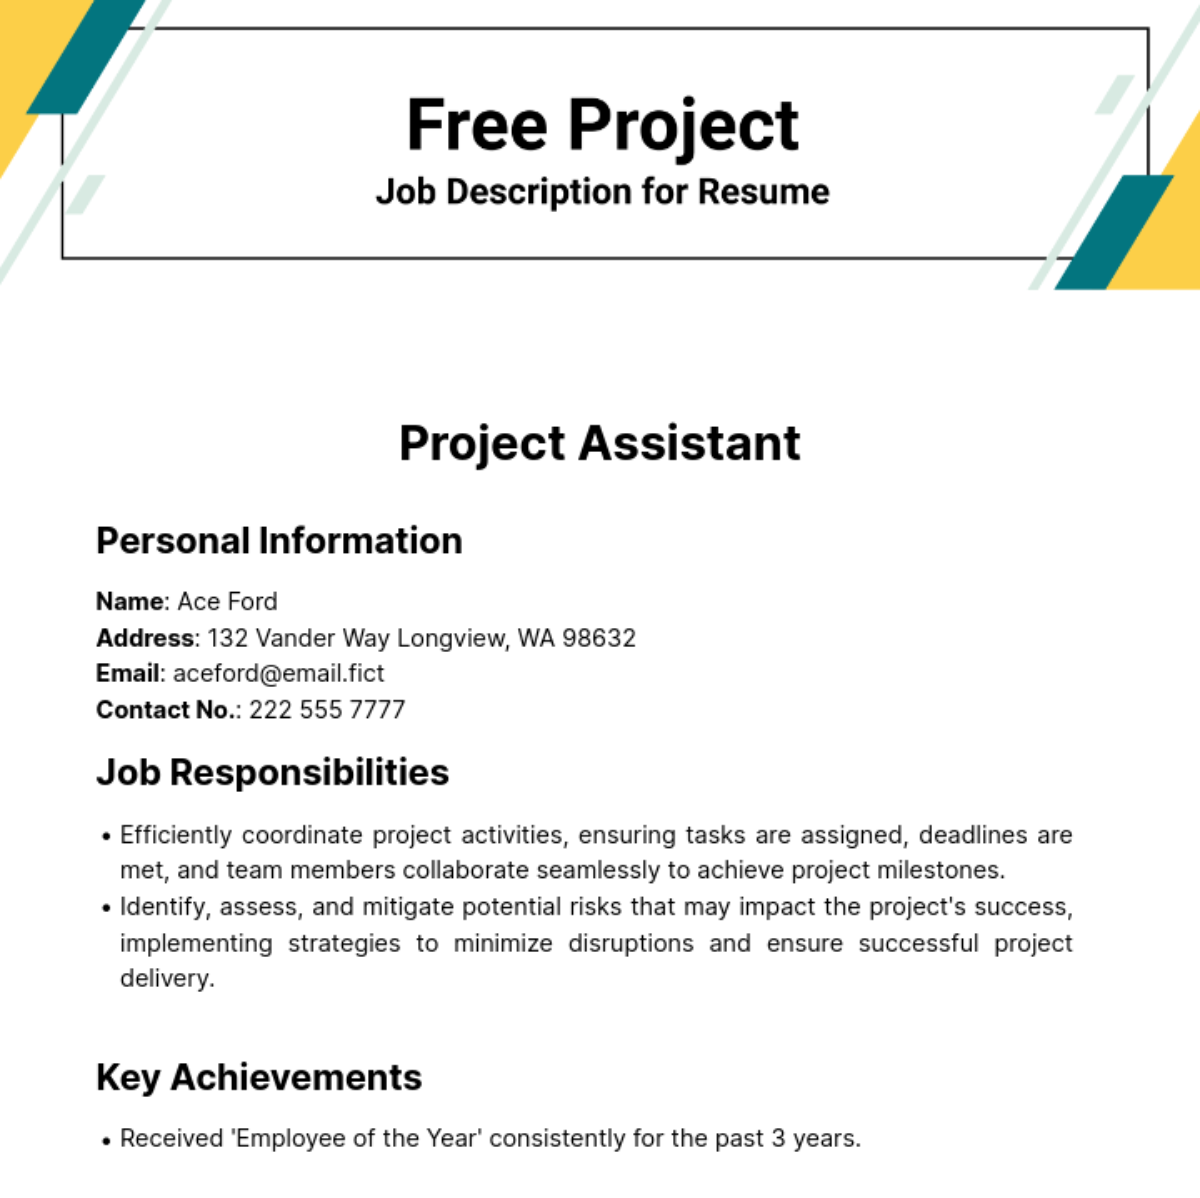 Free Project Job Description for Resume Template